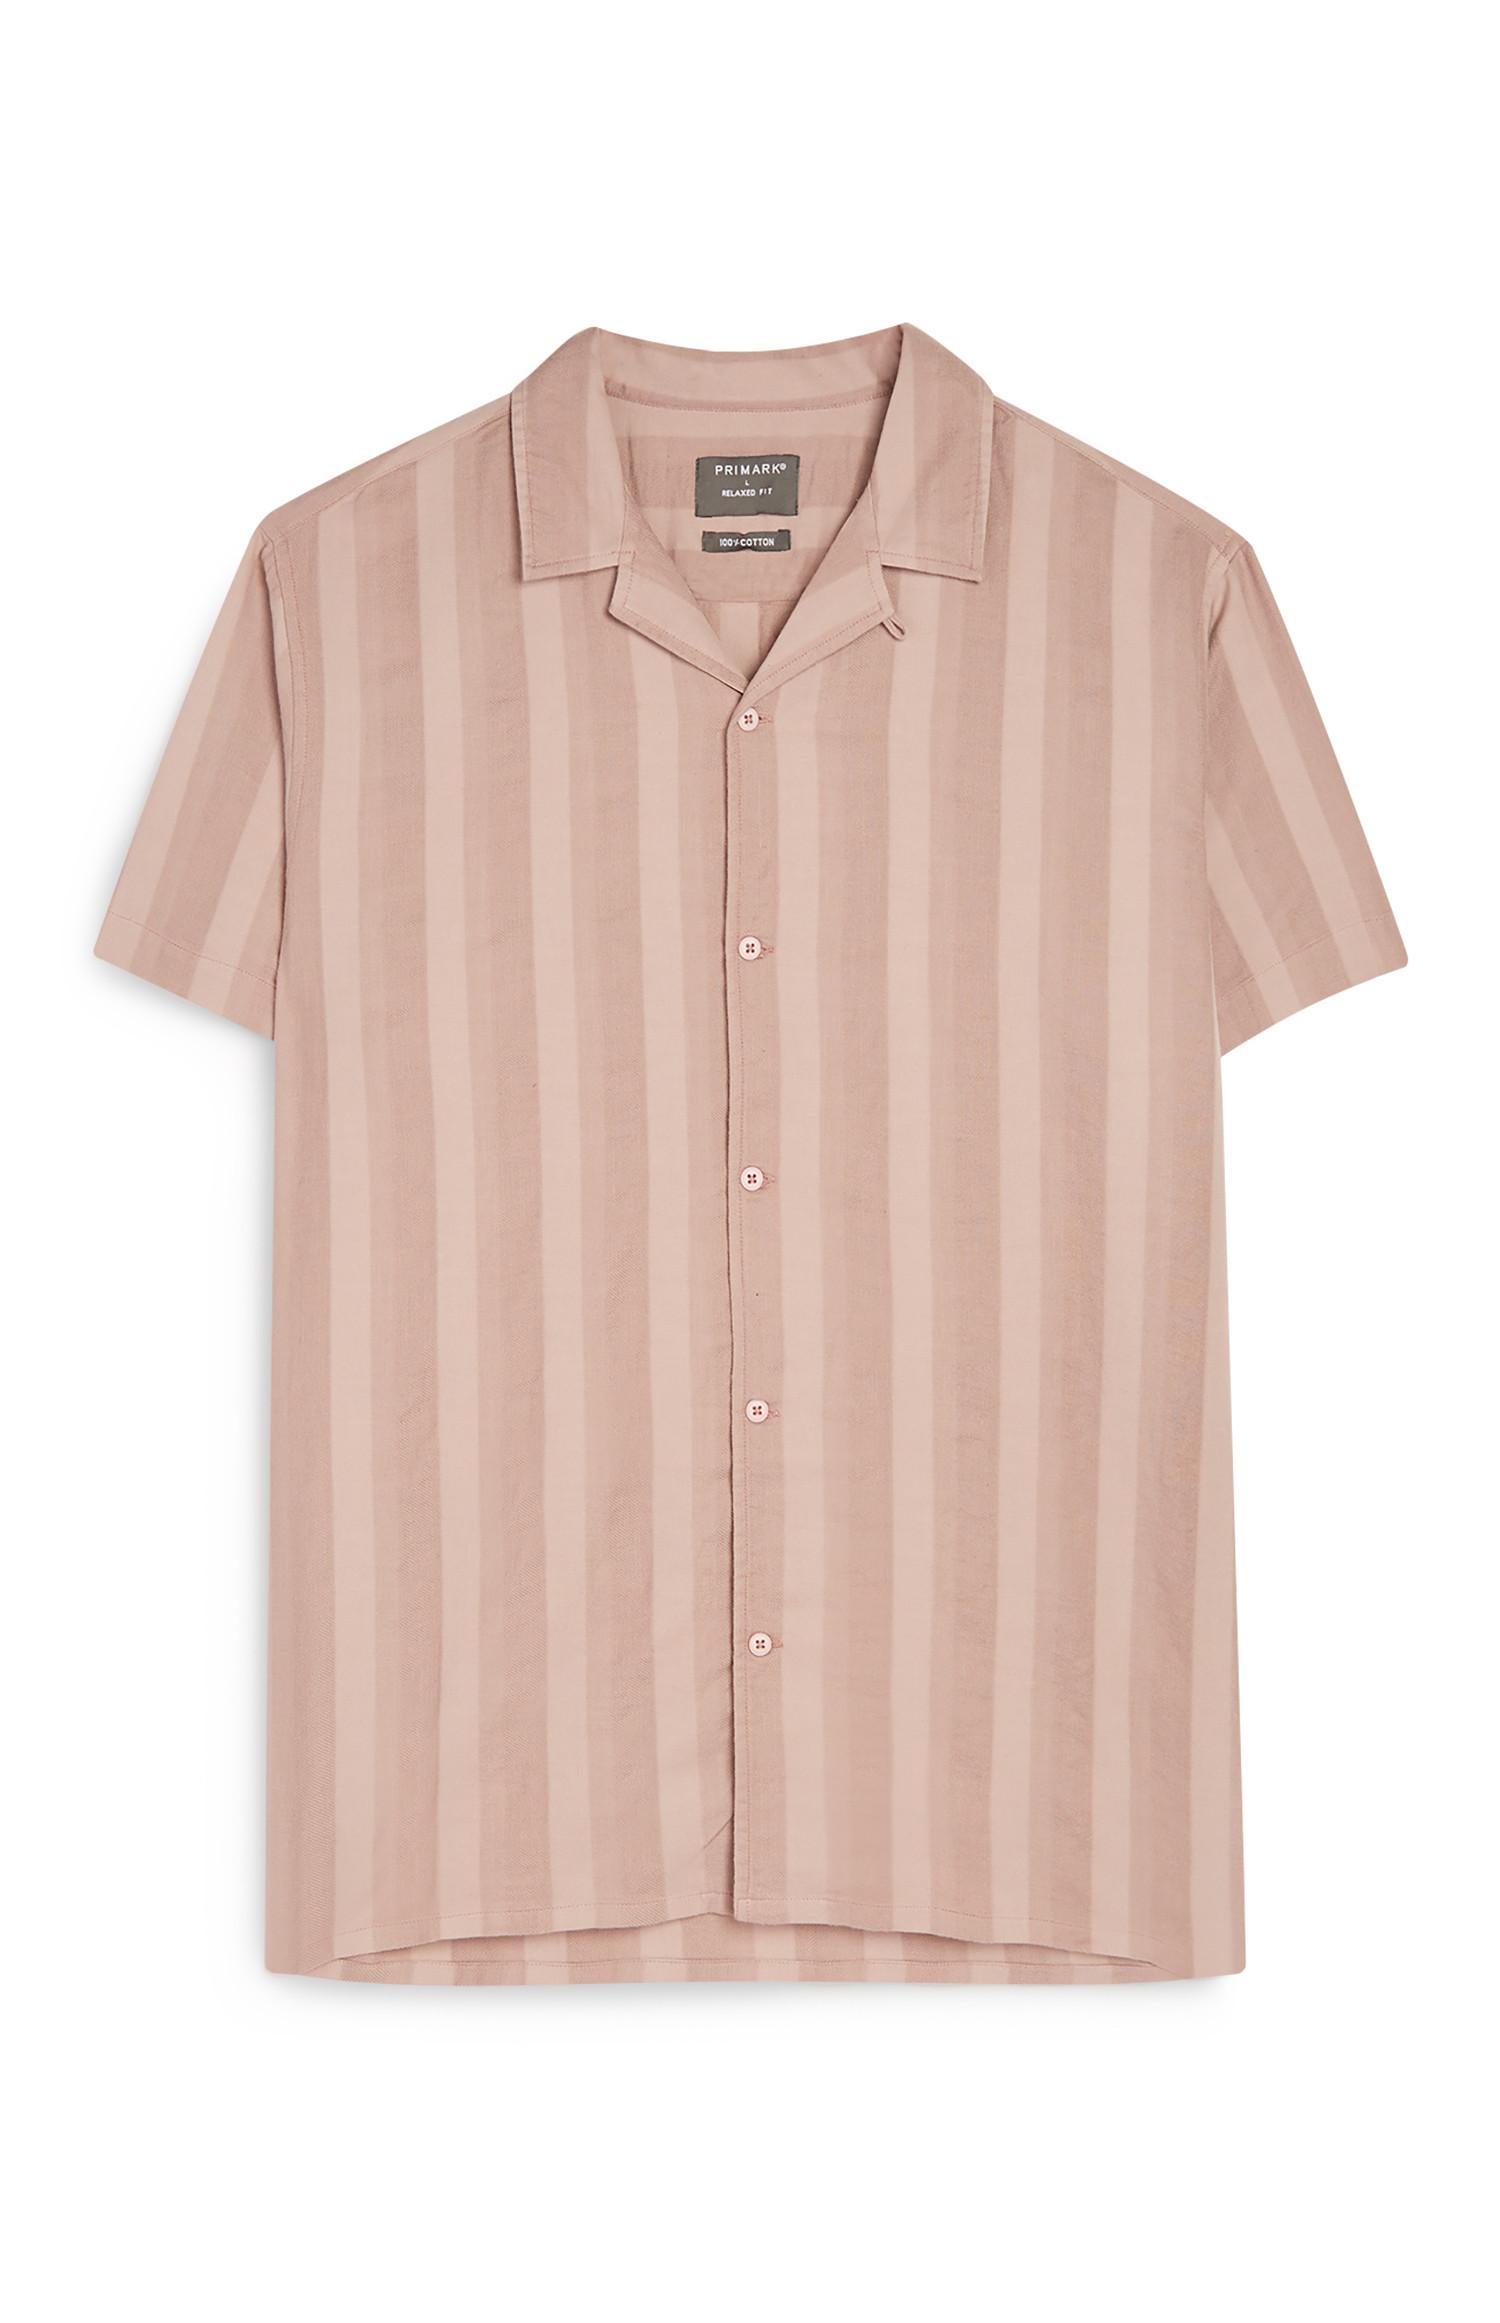 Shirts For Men Denim Long Sleeve Shirts Primark Uk - grey striped shirt with denim jacket roblox grey stripes